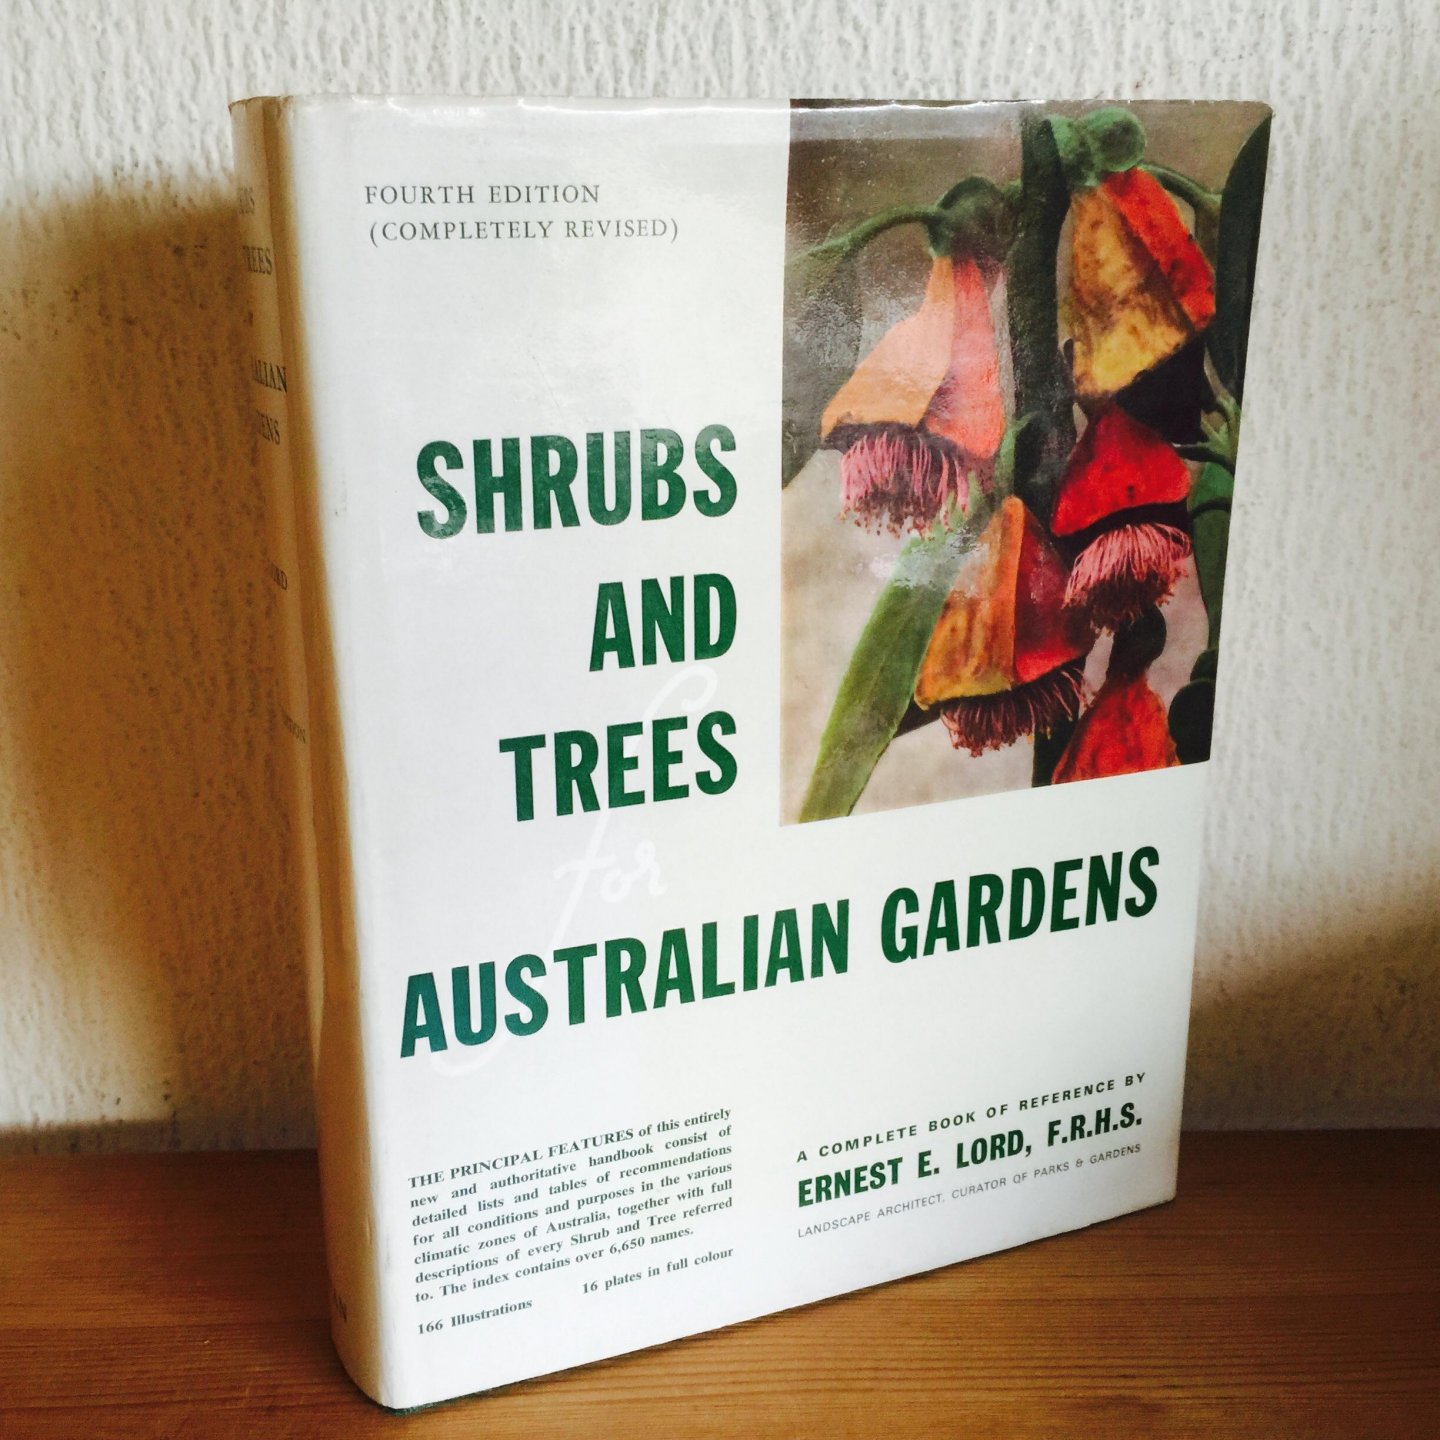 Ernest E Lord , Landscape Architect - SHRUBS and TREES for AUSTRALIAN GARDENS